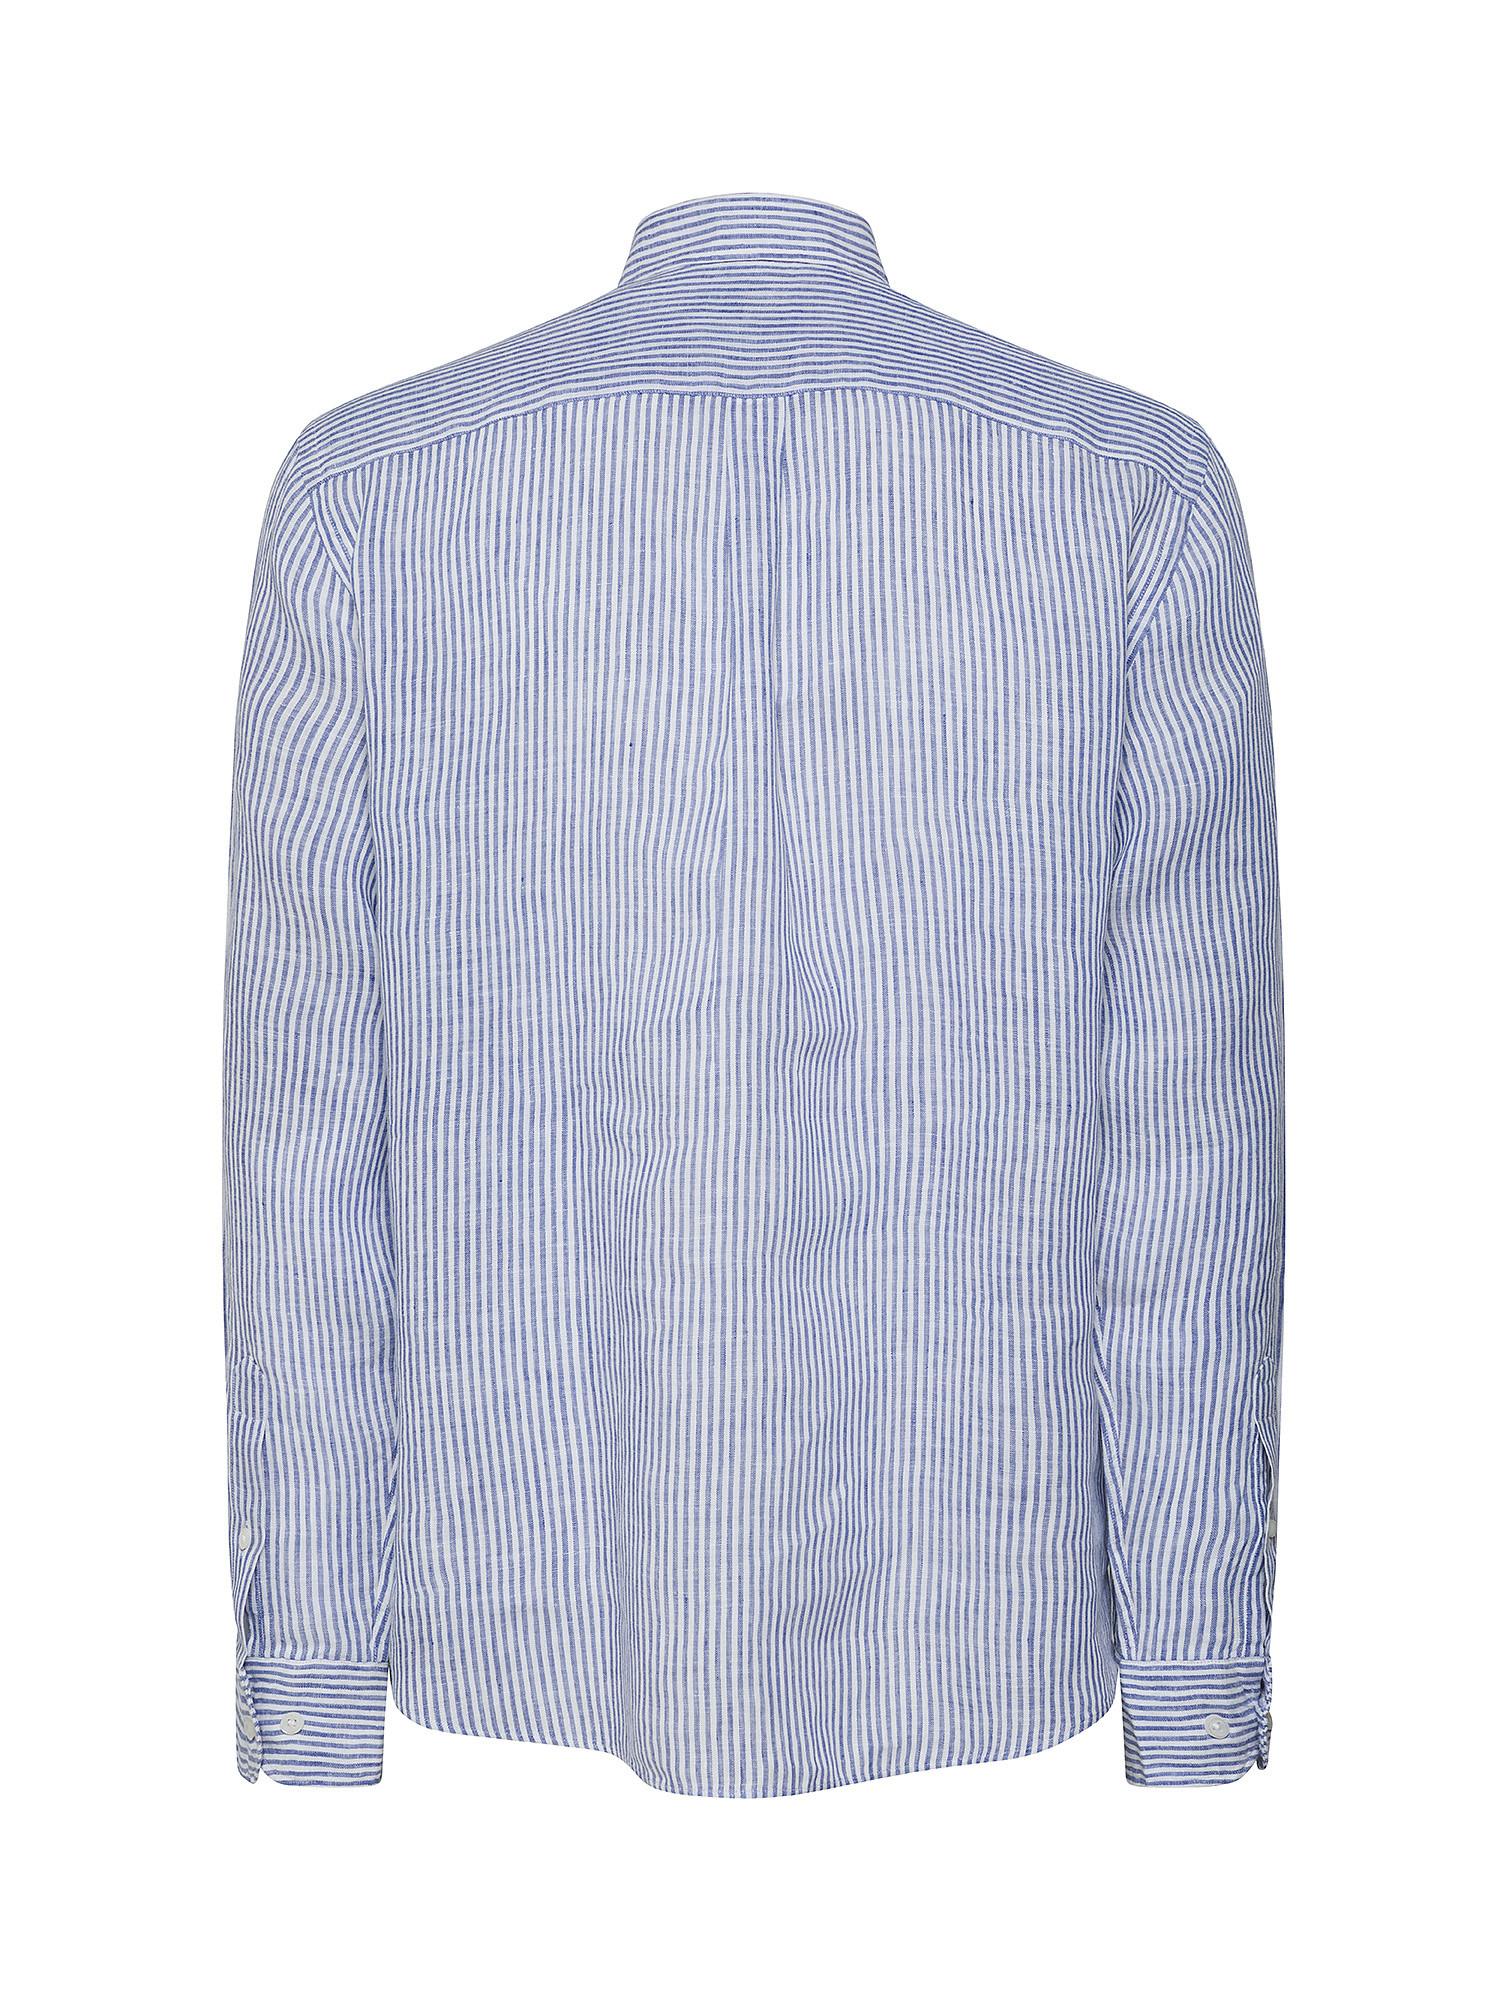 Luca D'Altieri - Camicia tailor fit in puro lino, Blu, large image number 1